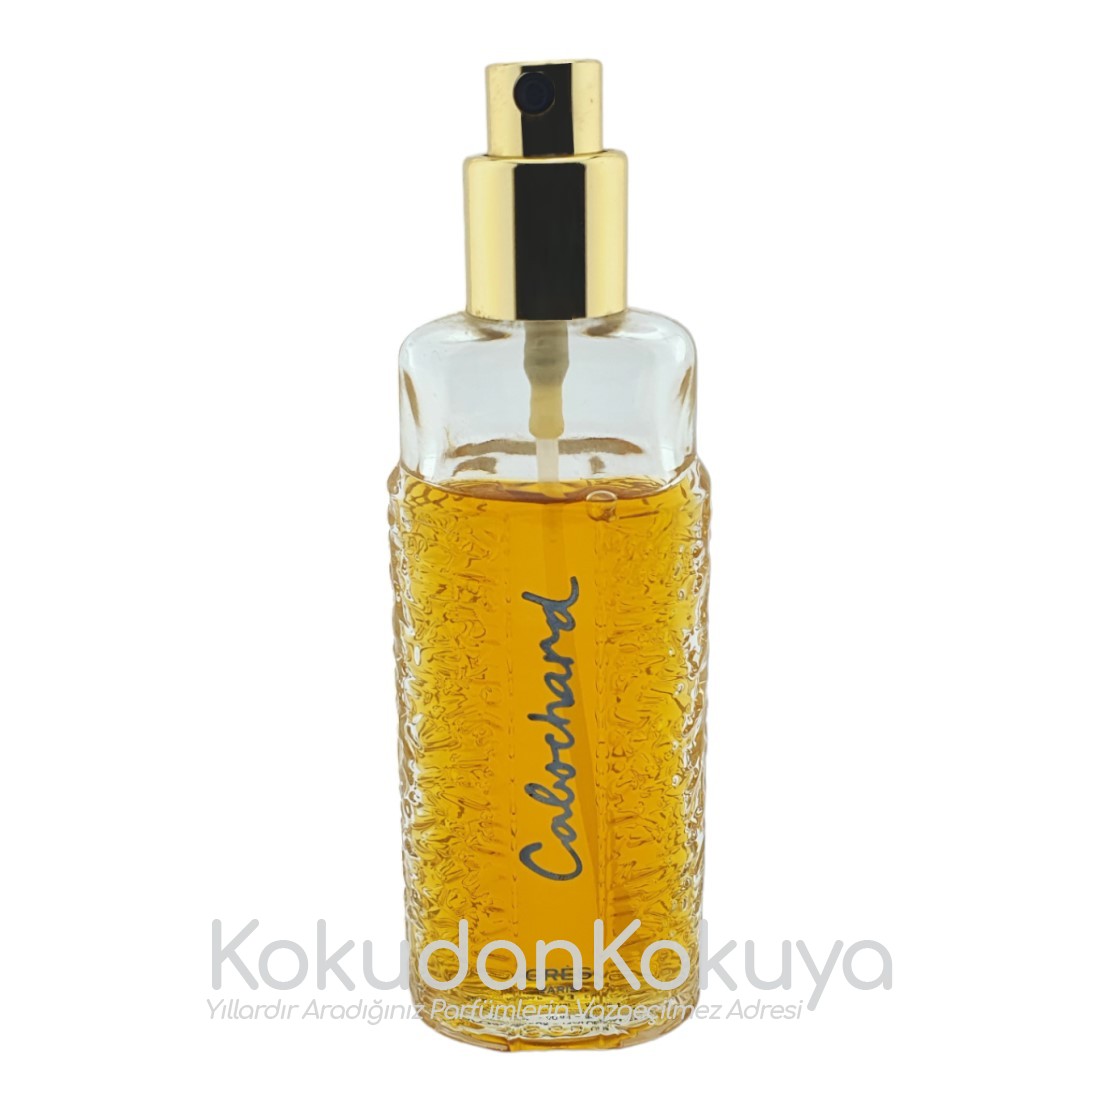 PARFUMS GRES Cabochard (Vintage) Parfüm Kadın 60ml Eau De Parfum (EDP) Sprey 